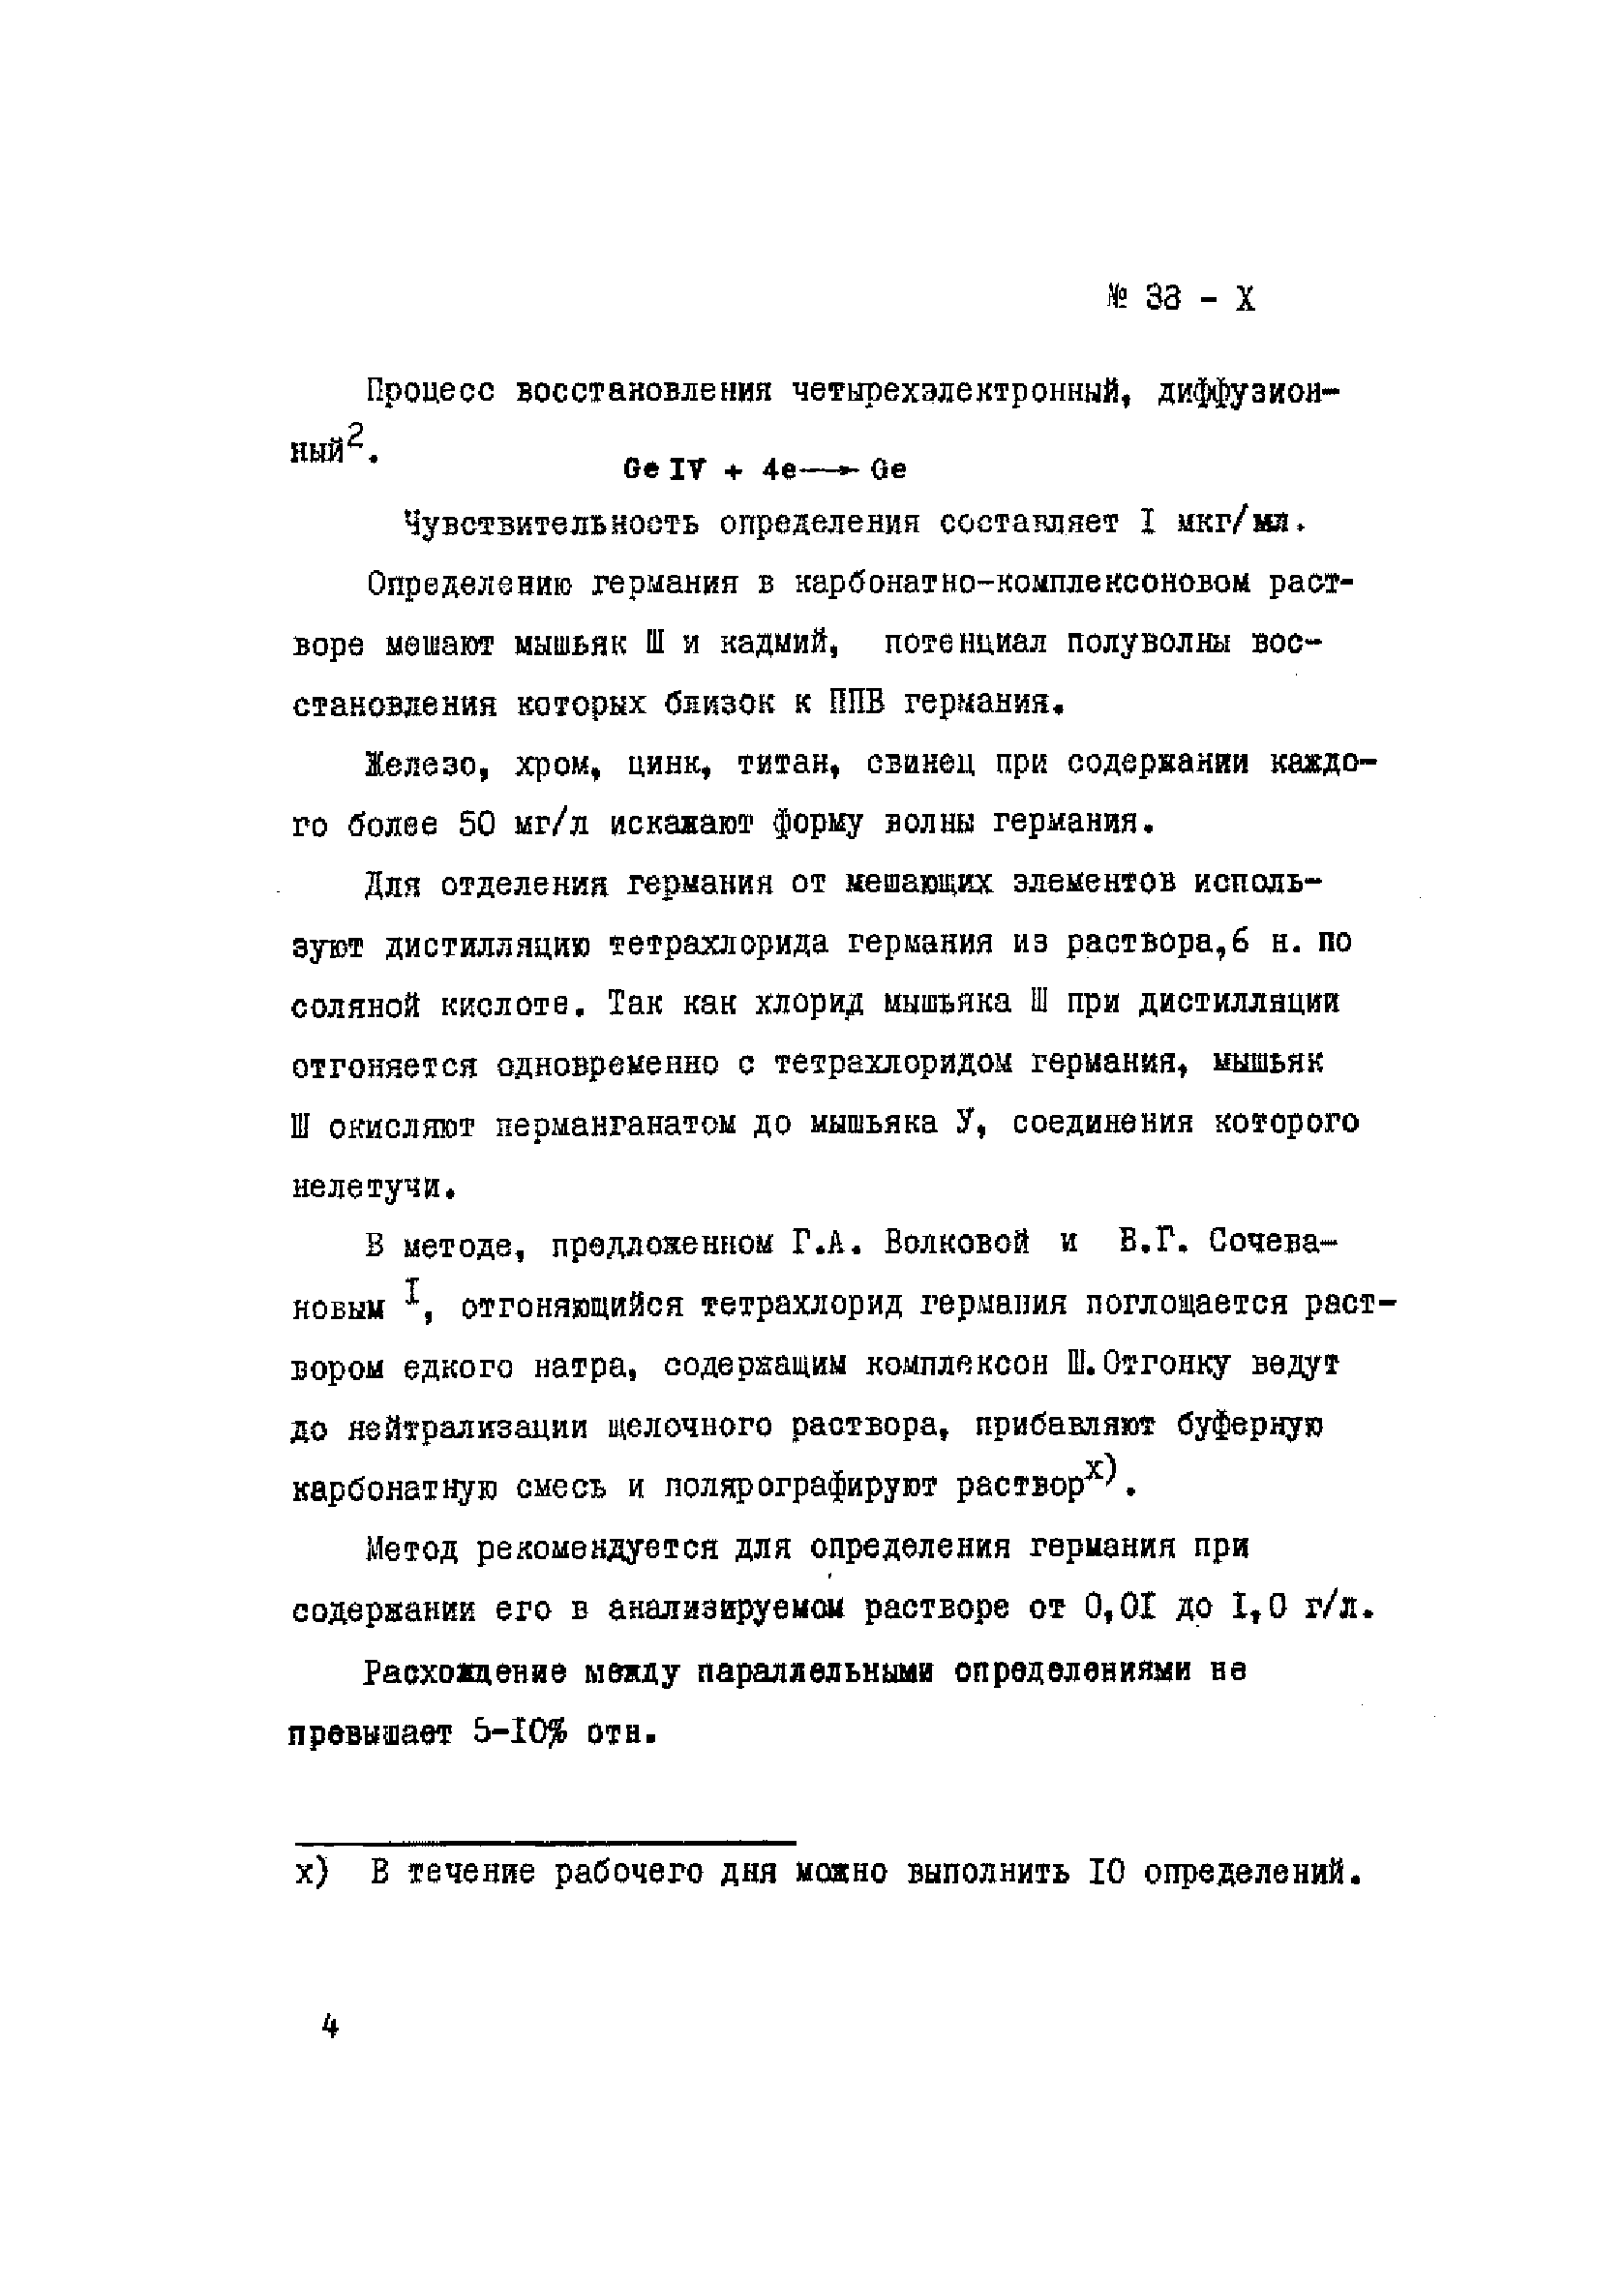 Инструкция НСАМ 38-Х